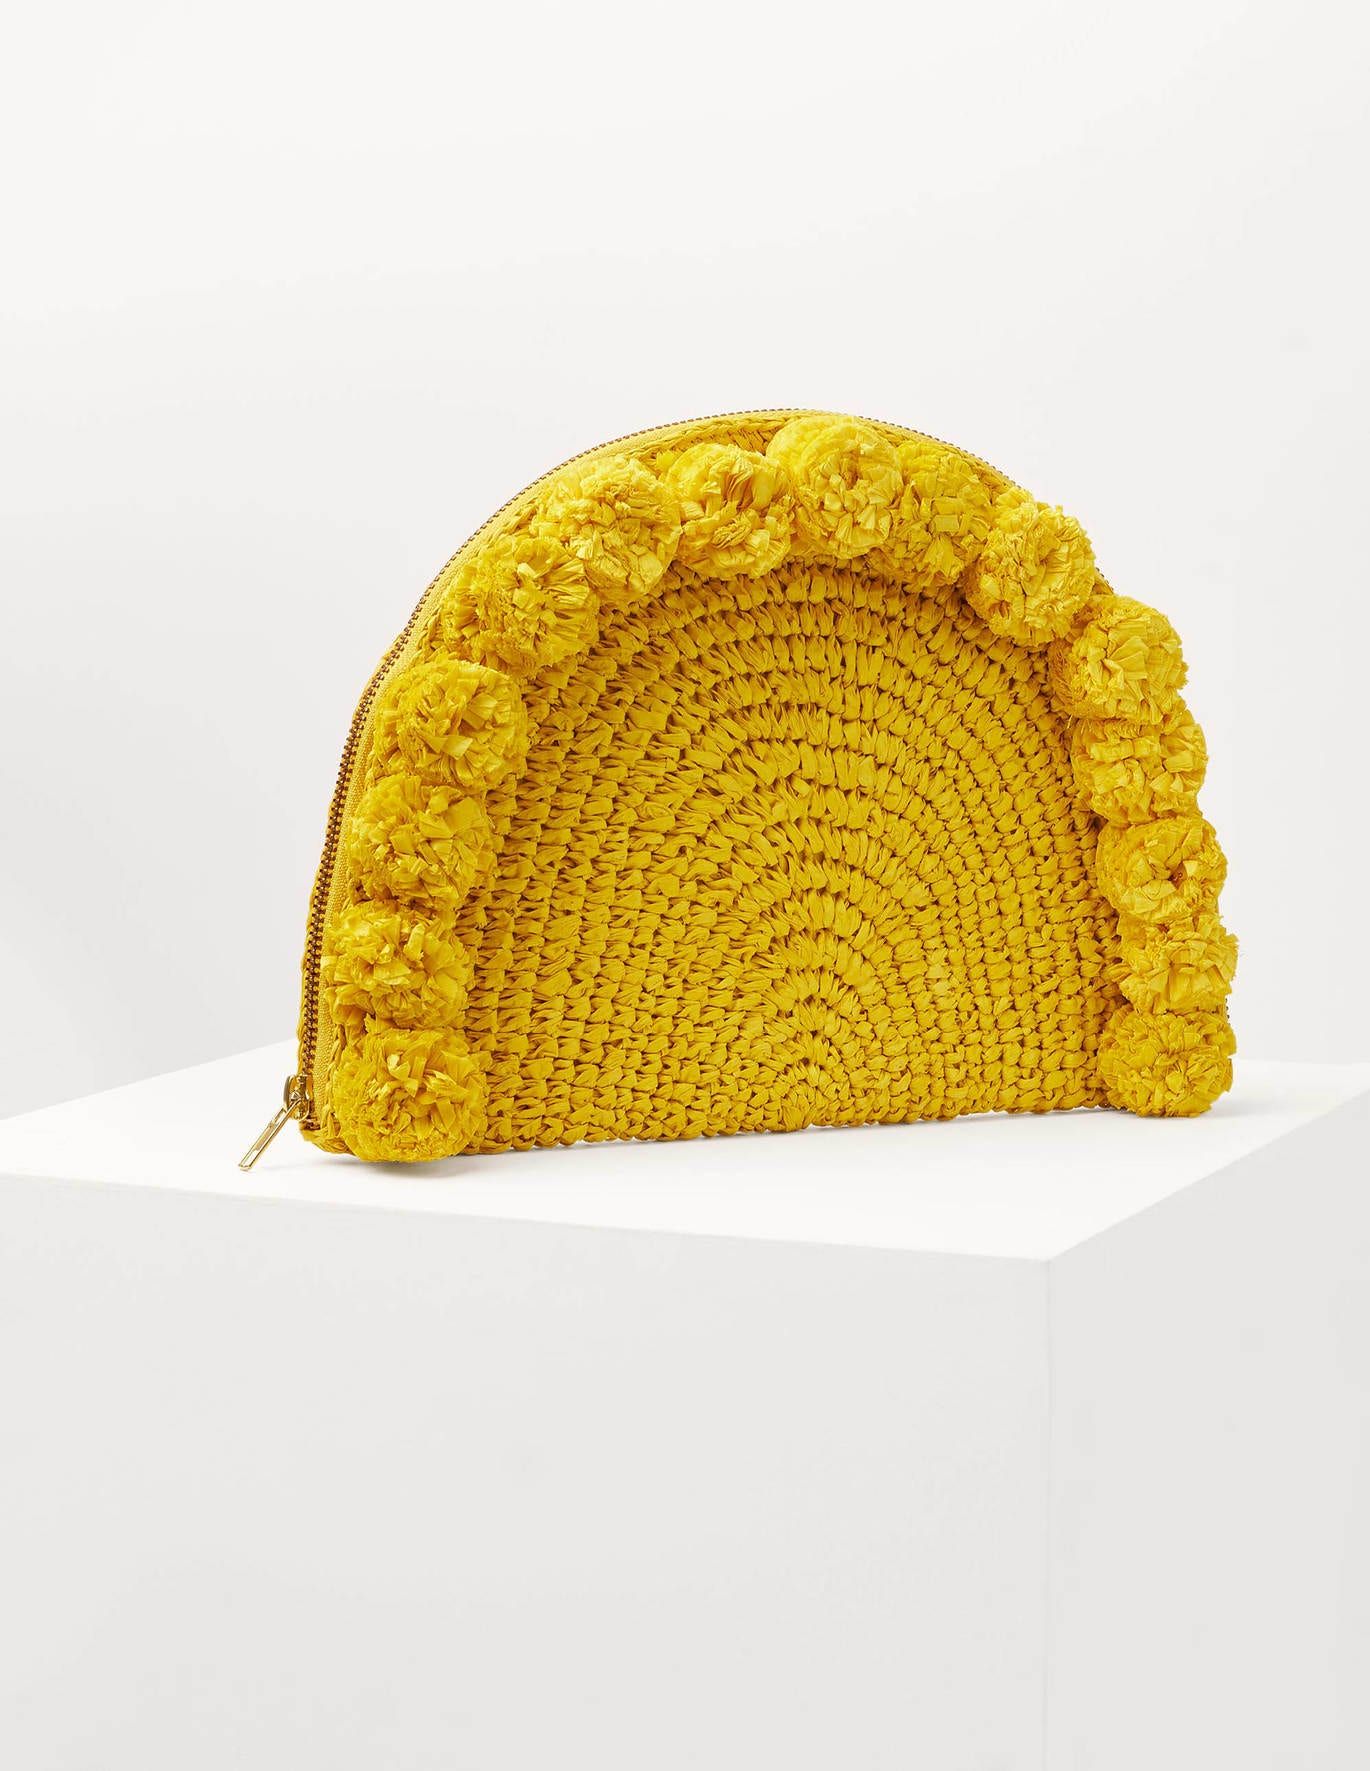 Christina Crochet Clutch